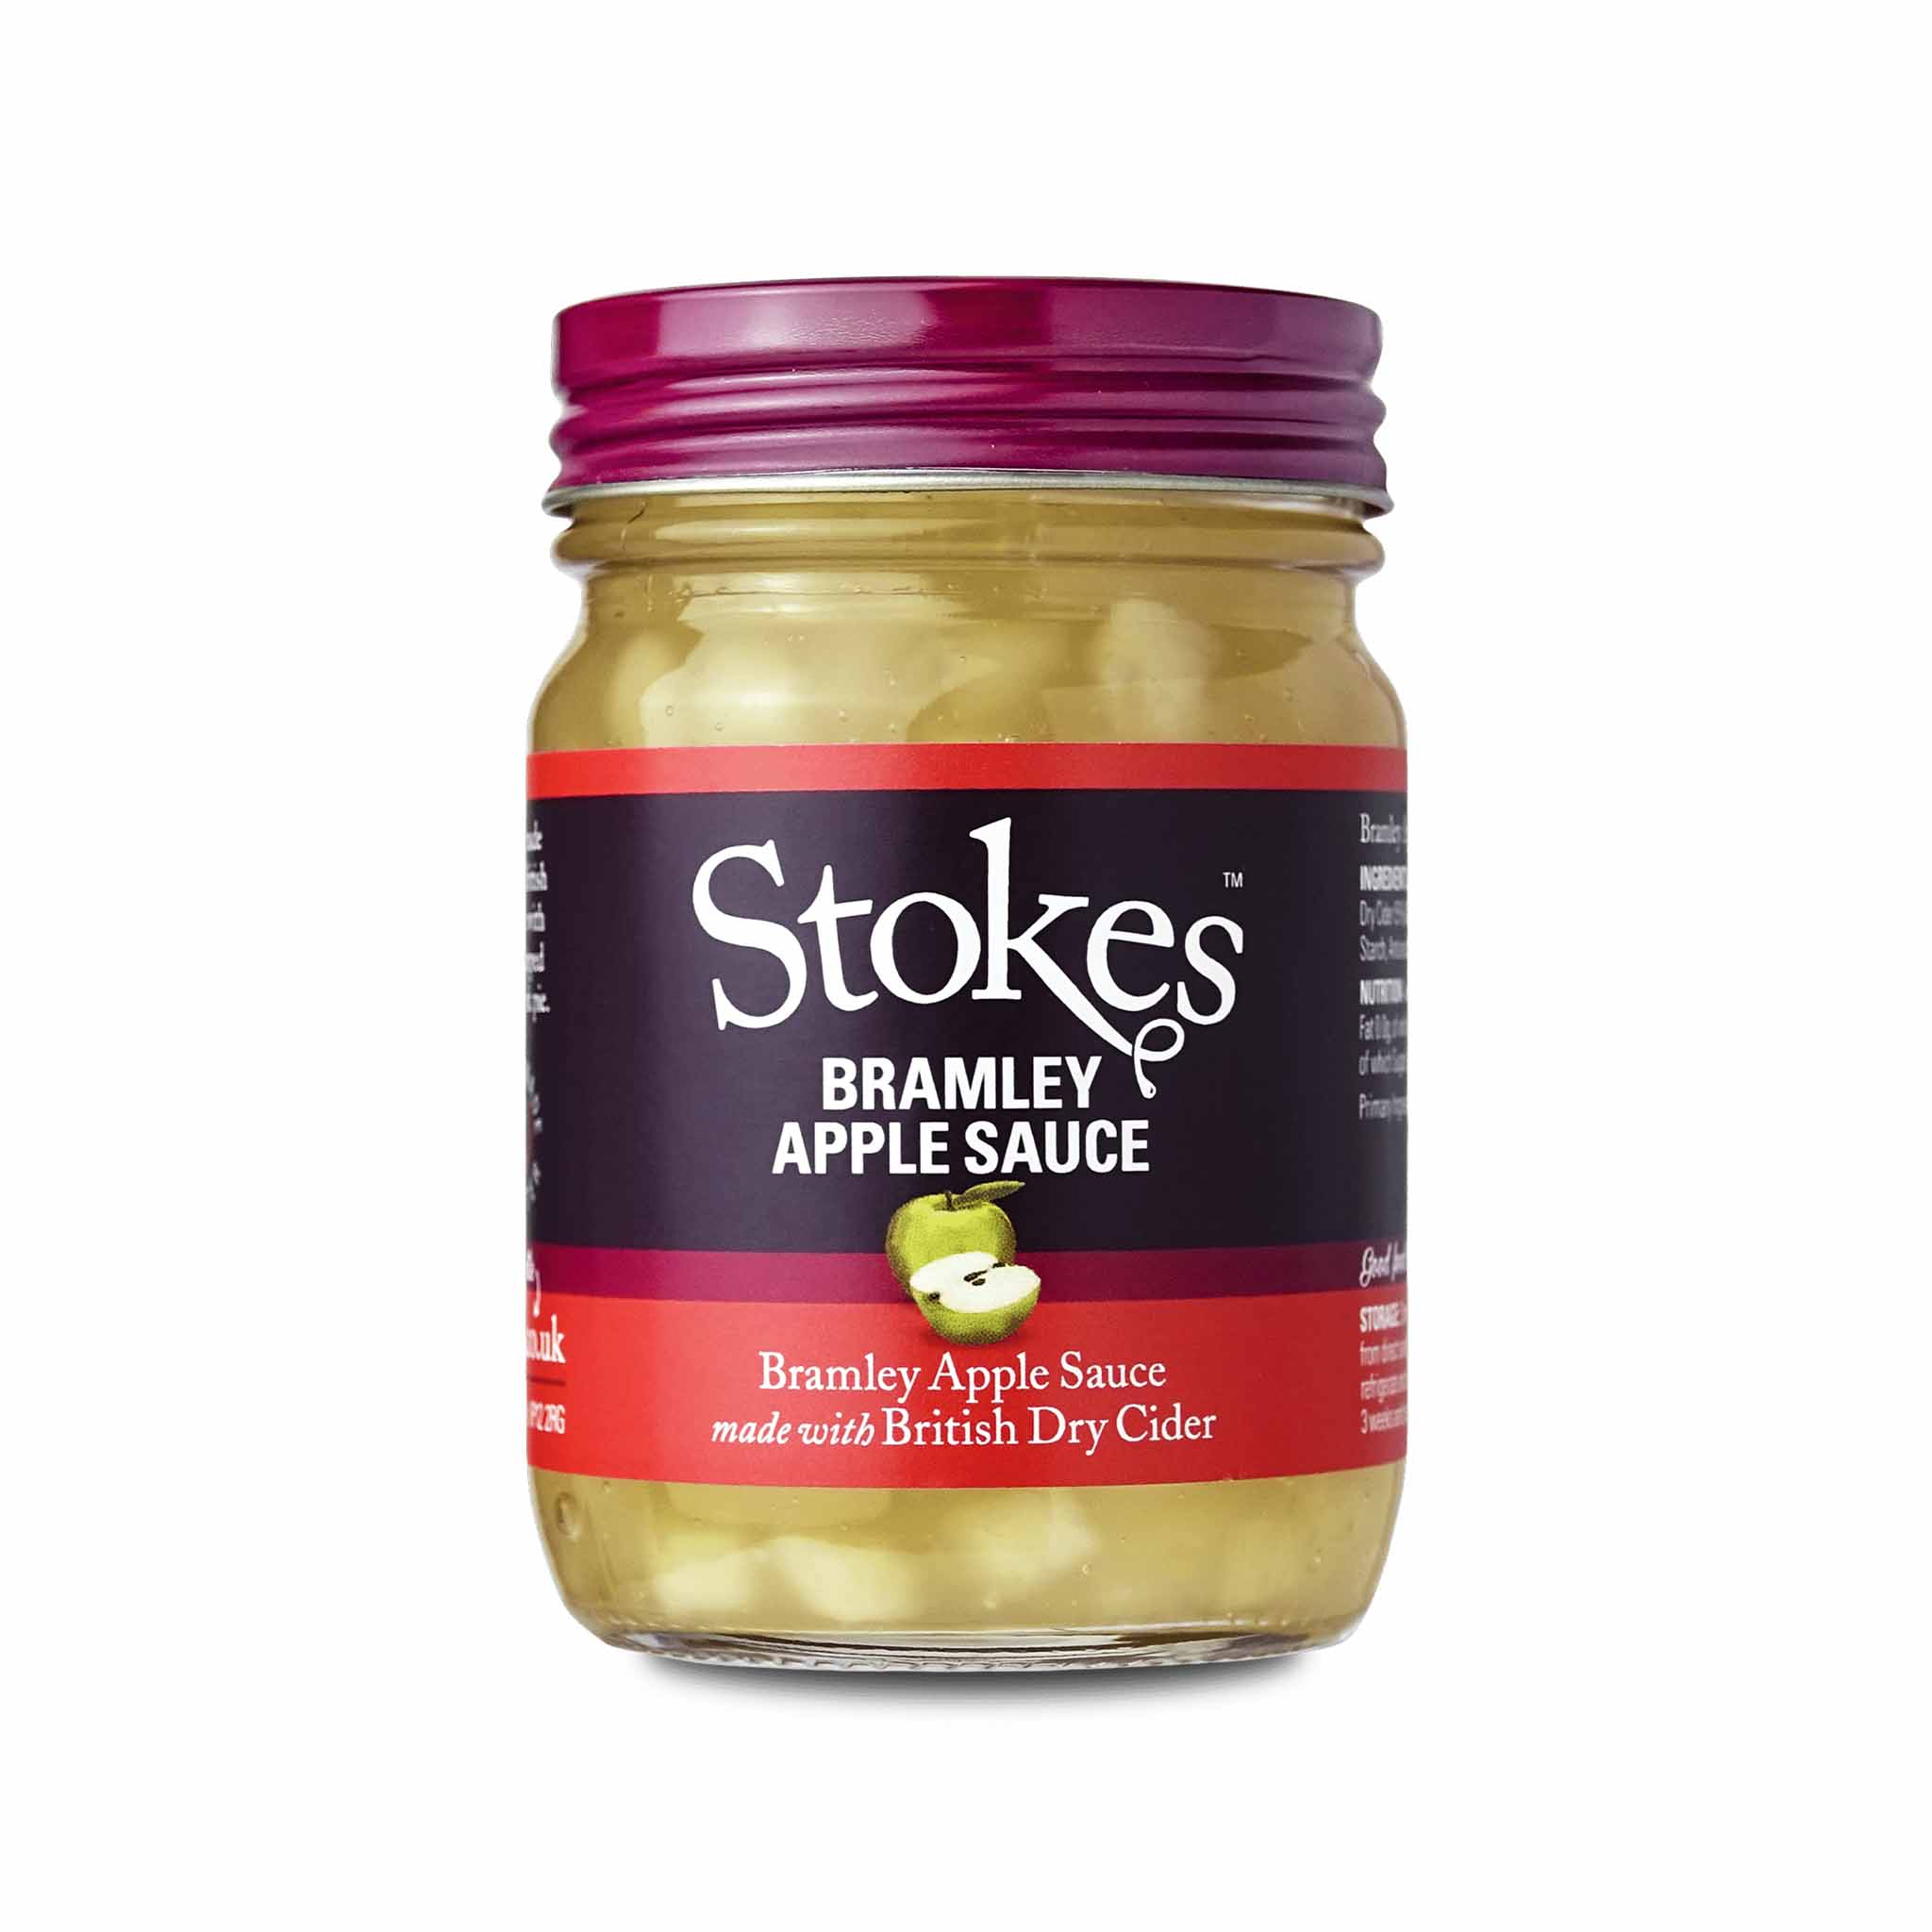 Stokes Bramley Apple Sauce in a Jar